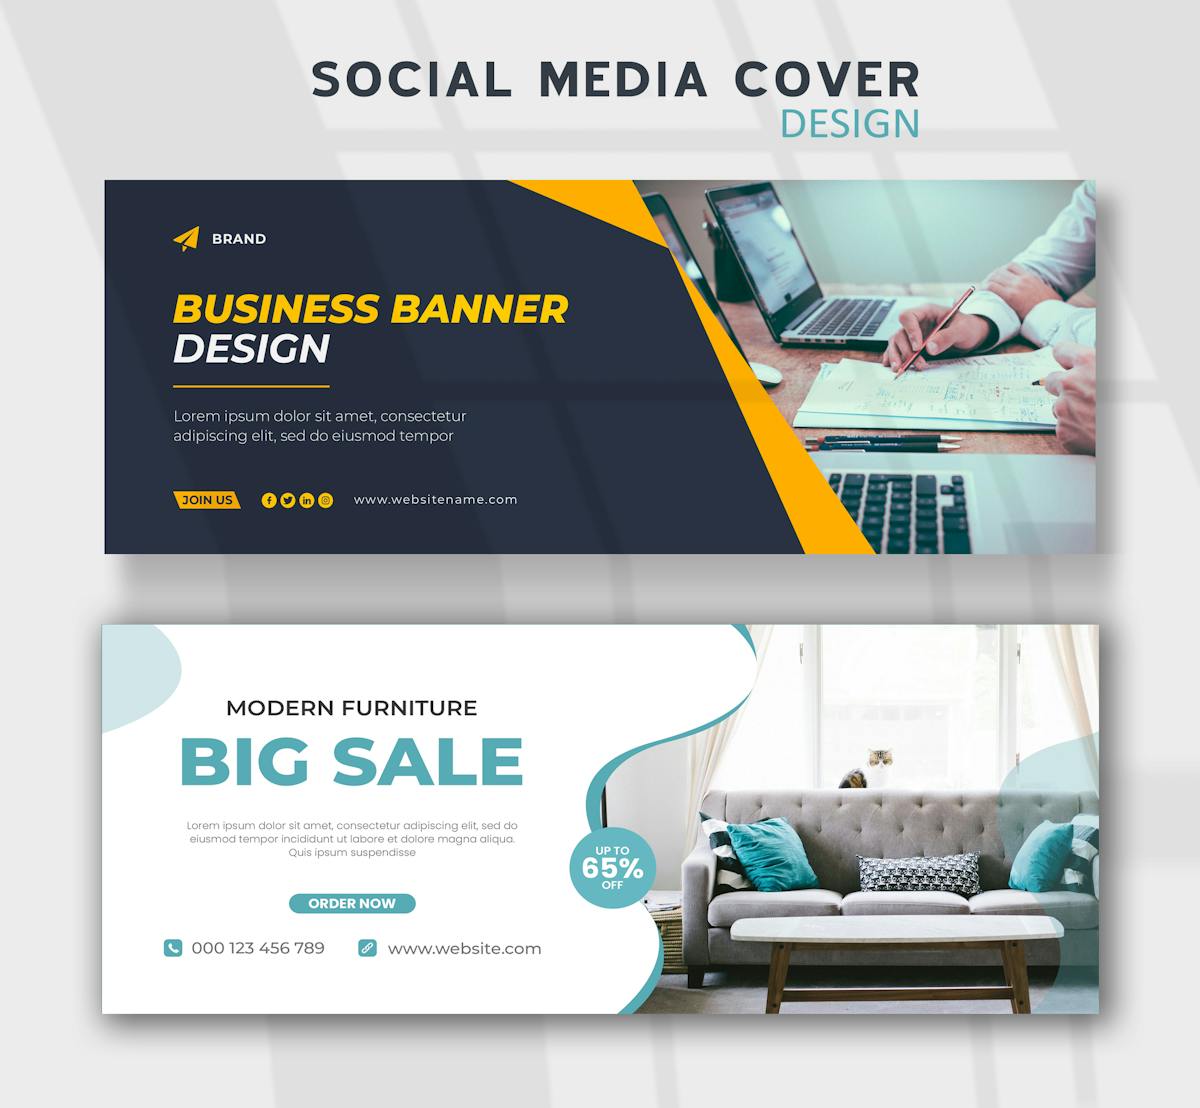 Social Media Cover Design